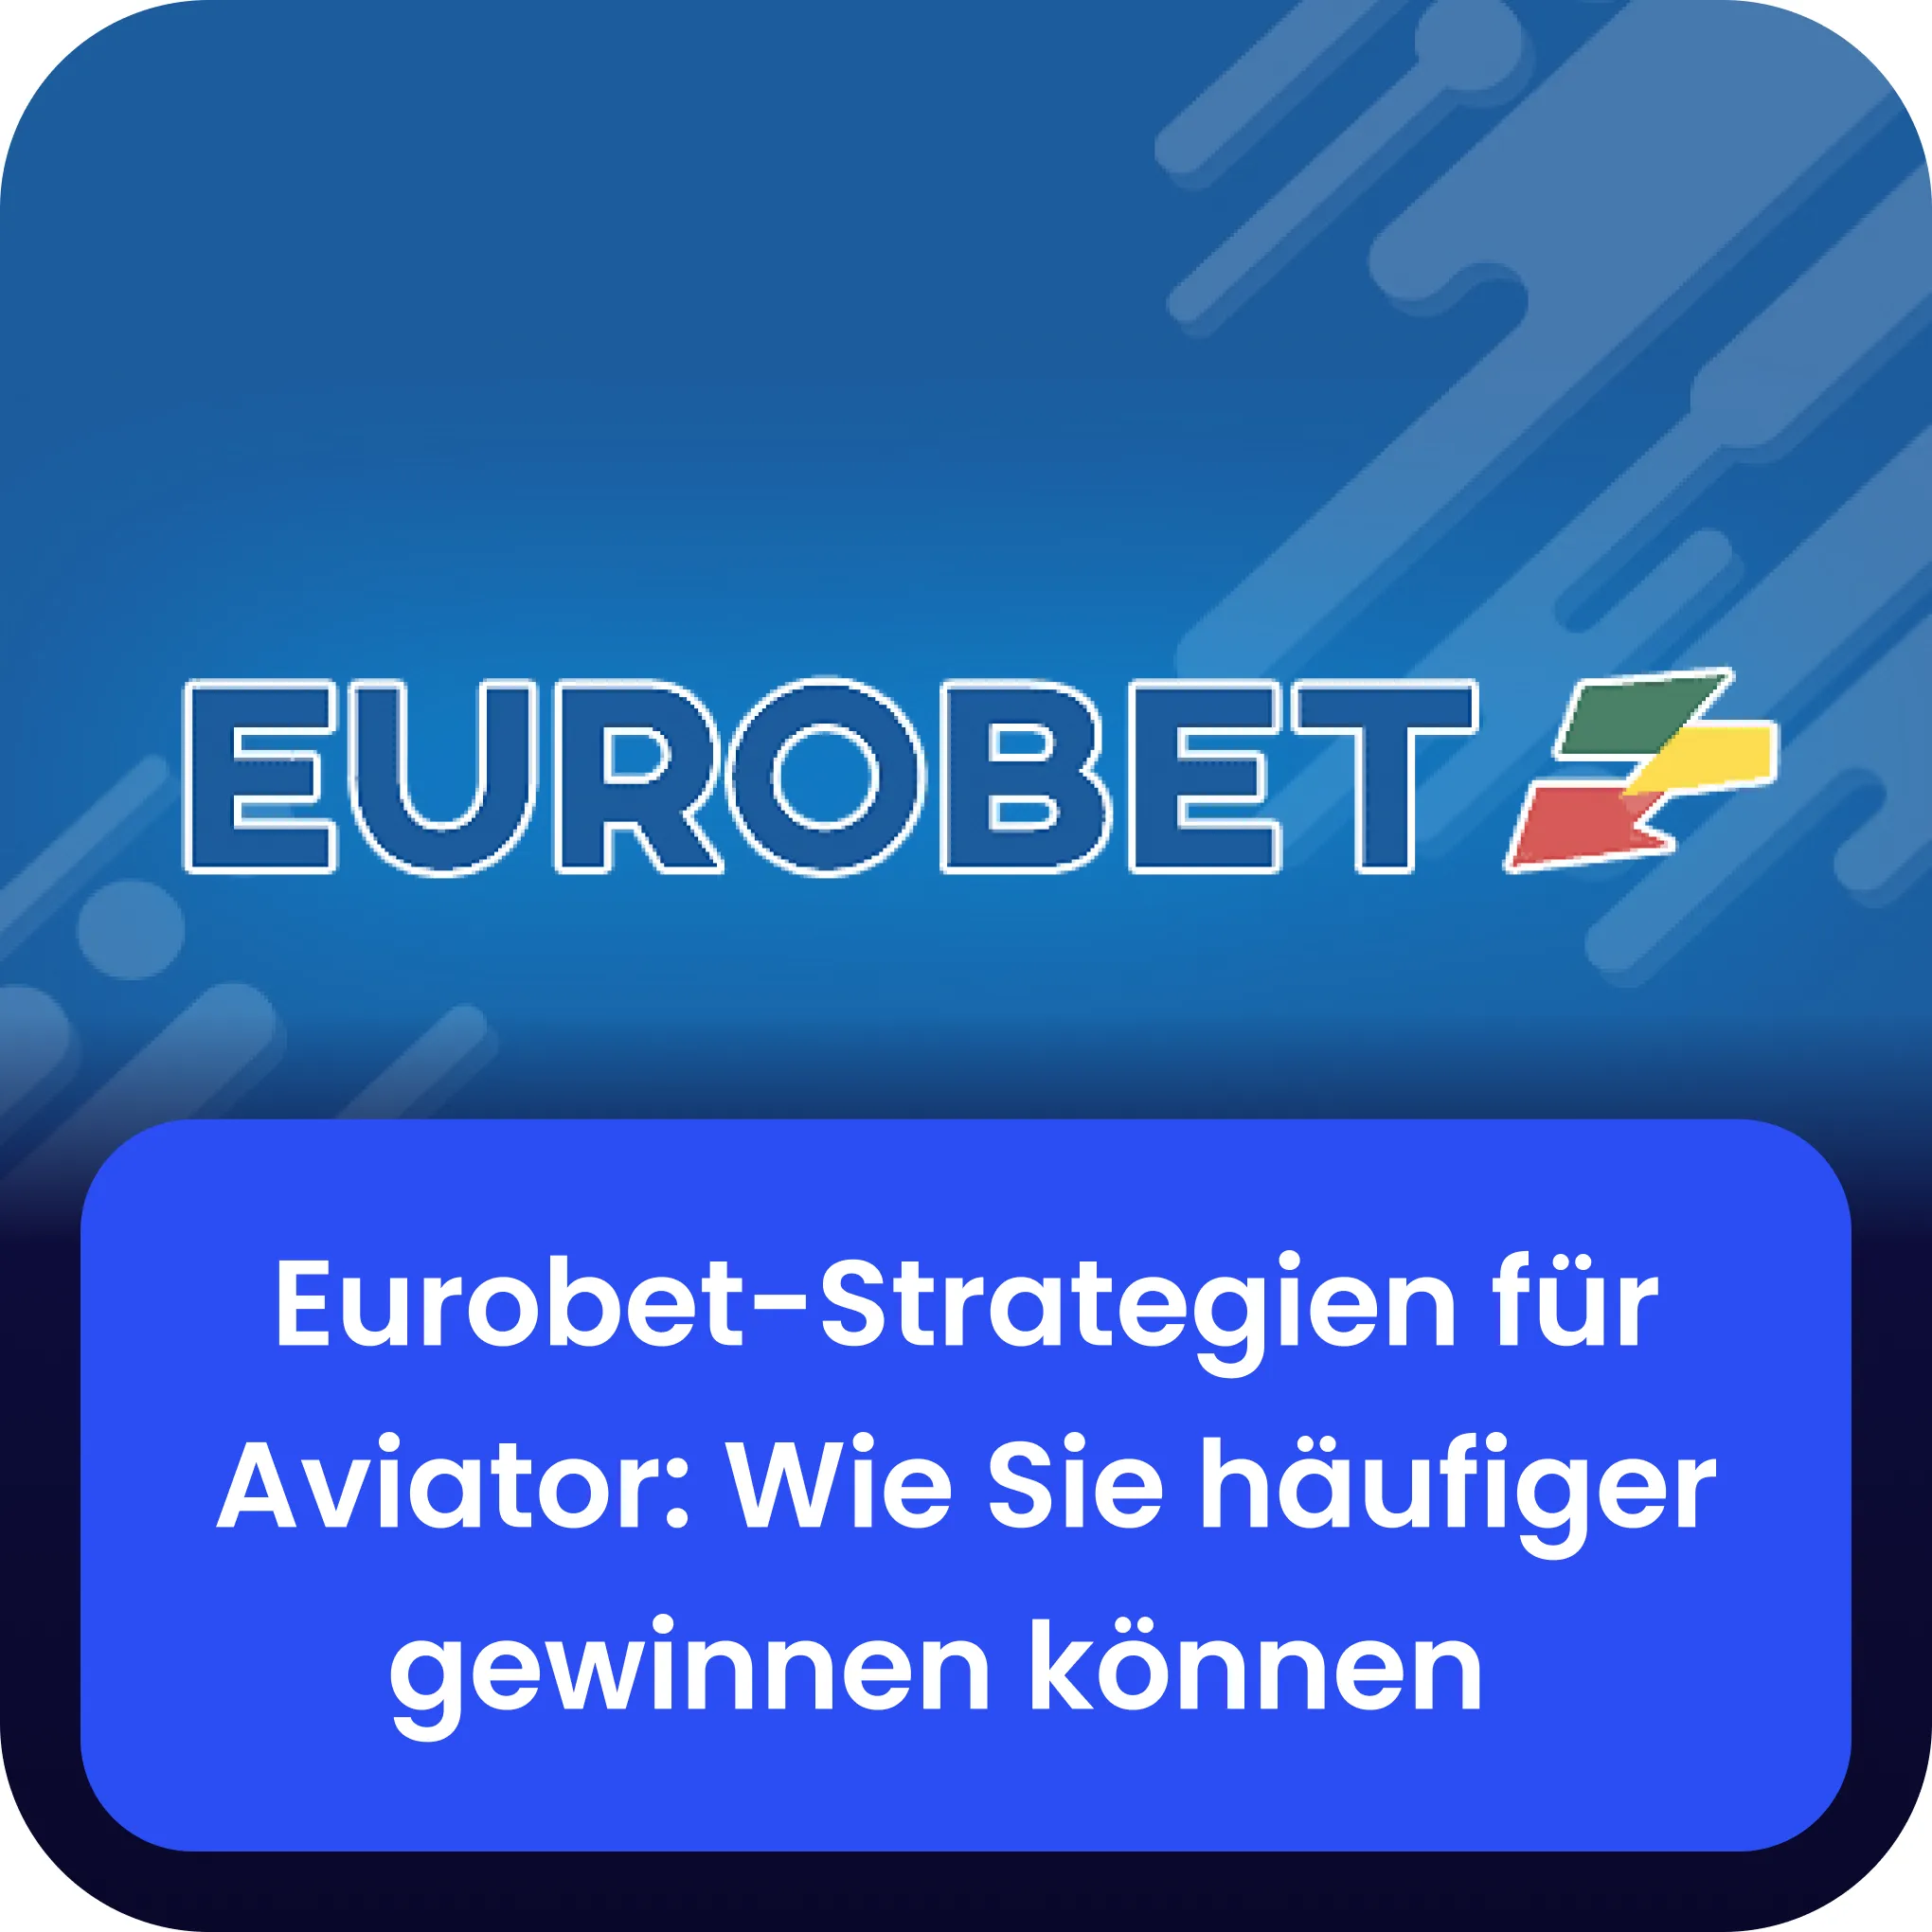 eurobet aviator Strategie